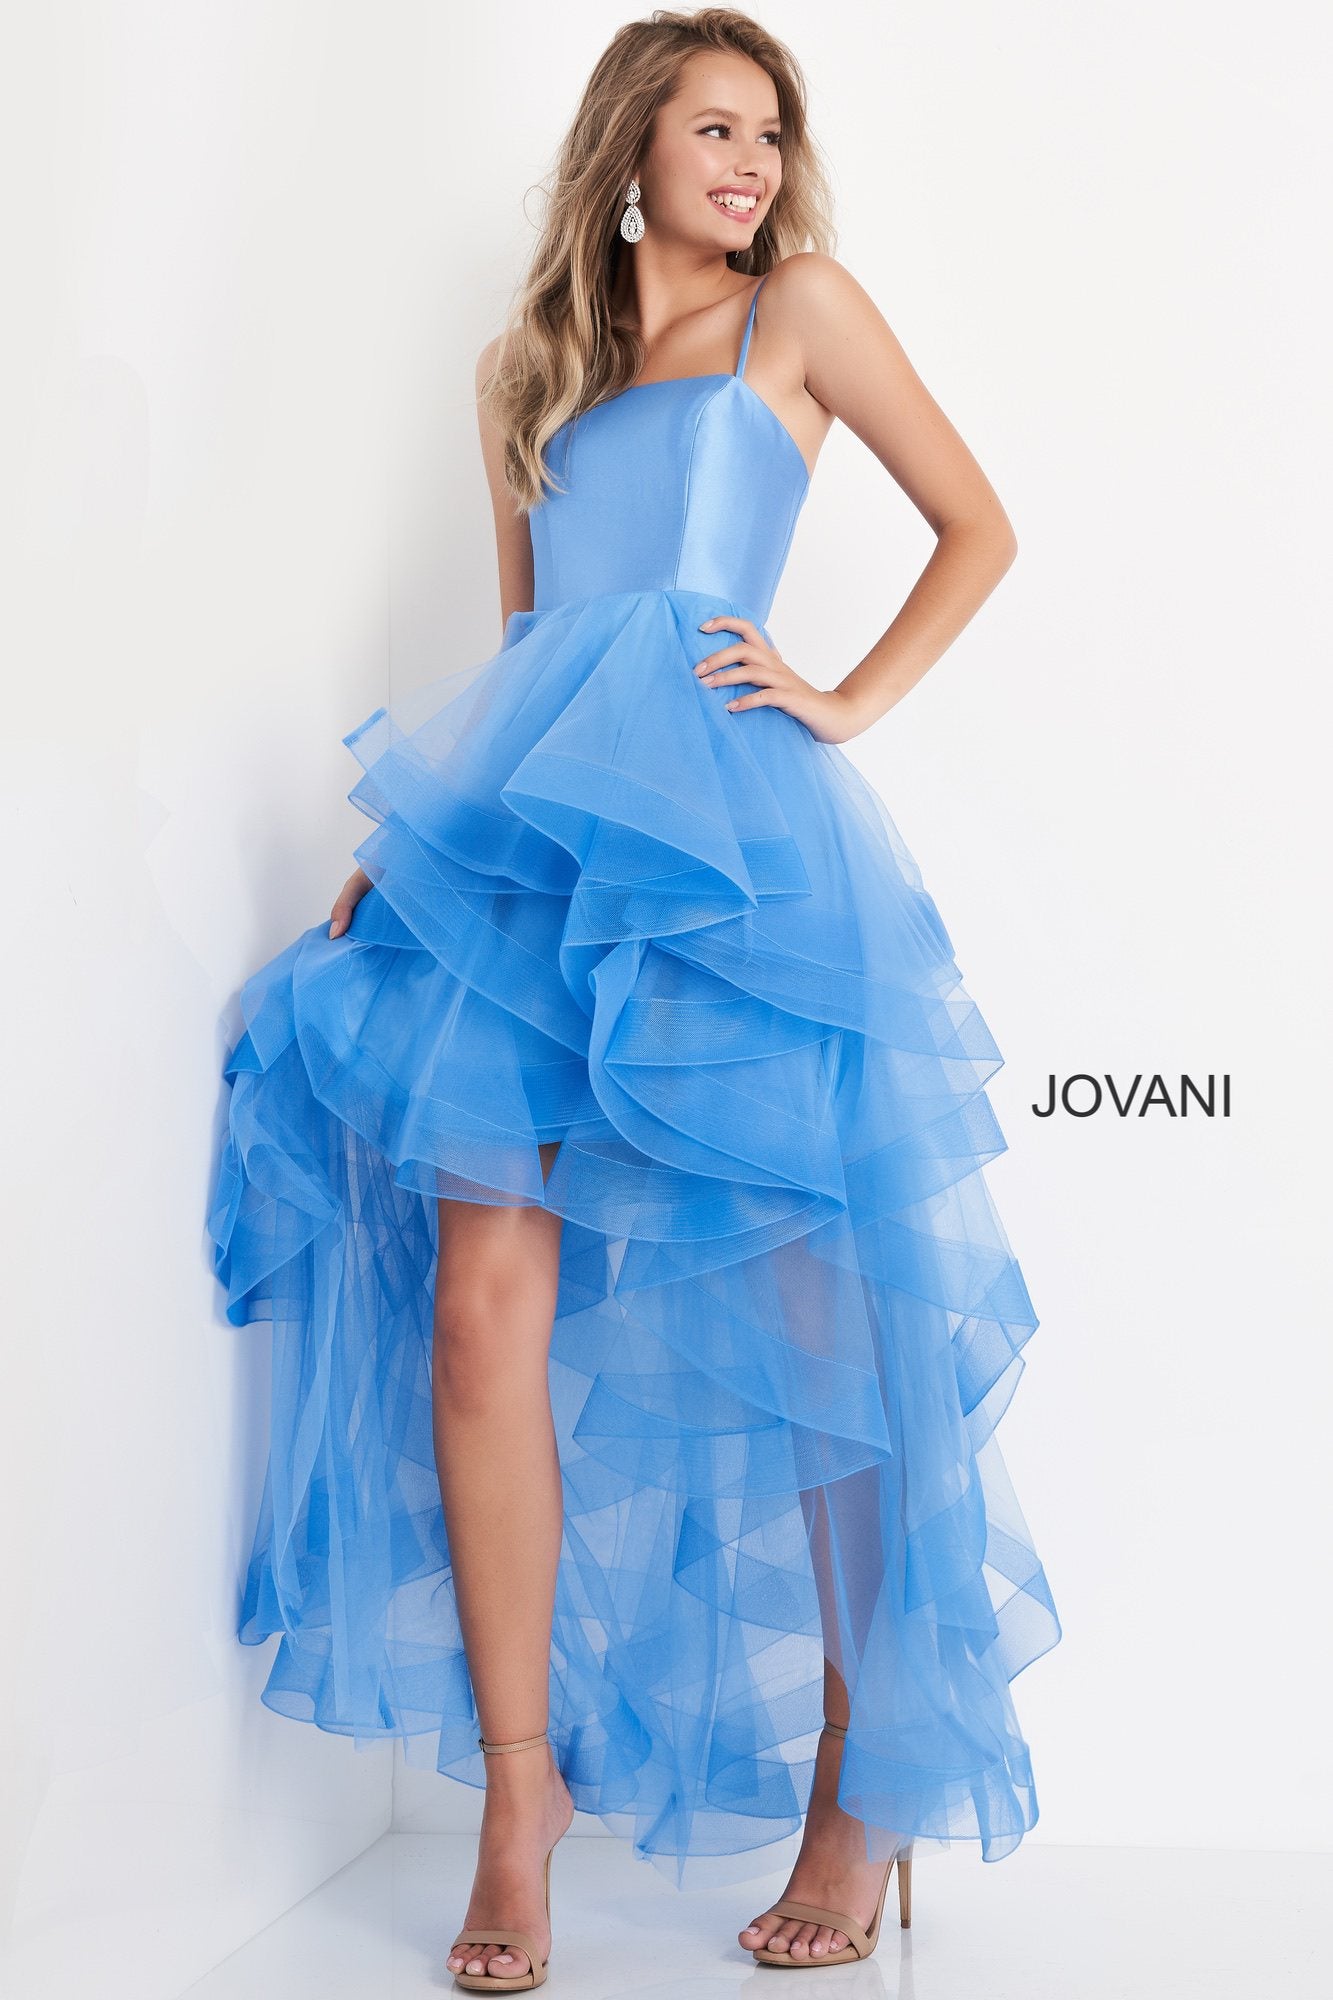 Jovani Kids K66708 Tulle Ruffle High Low Girls Formal Dress Party Gown Short Long